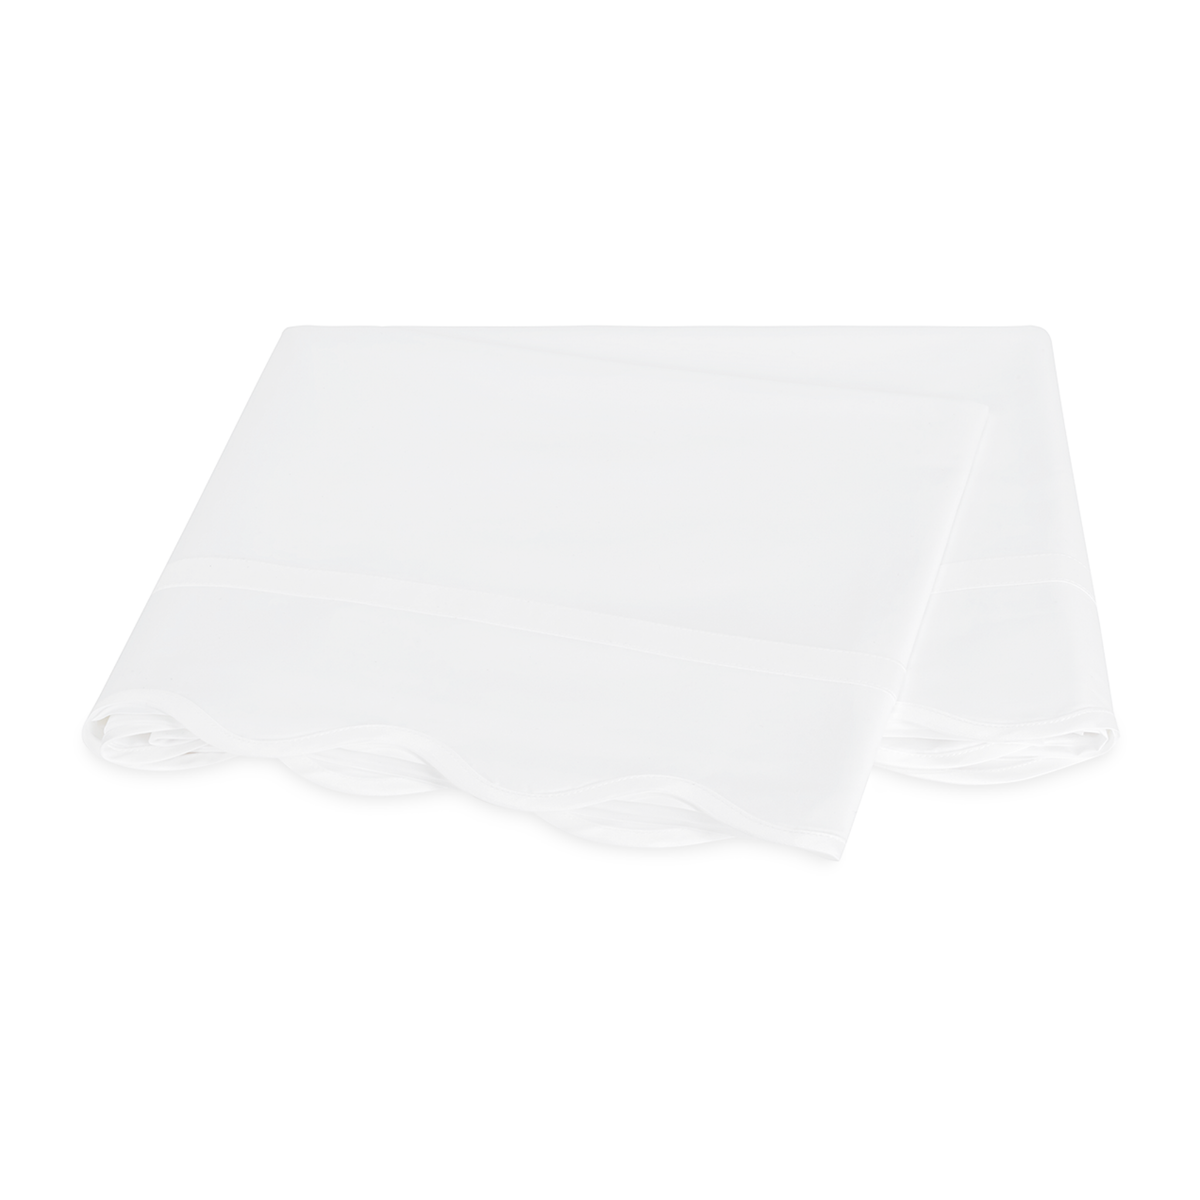 Flat Sheet of Matouk Cornelia Bedding in White Color